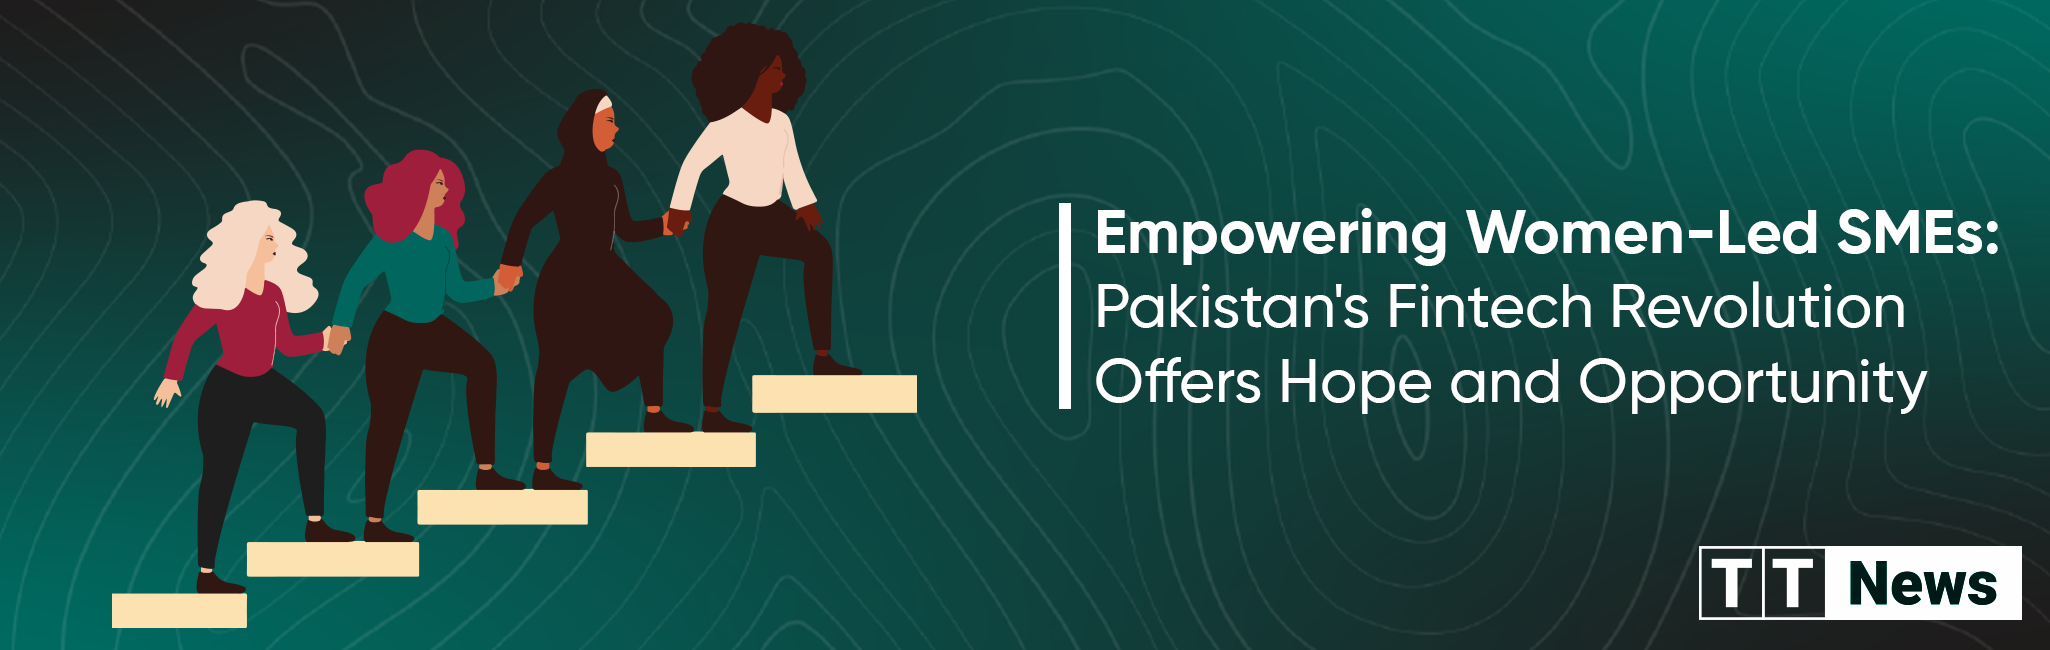 Empowering Women – Led SMEs in Pakistan's Fintech Revolution